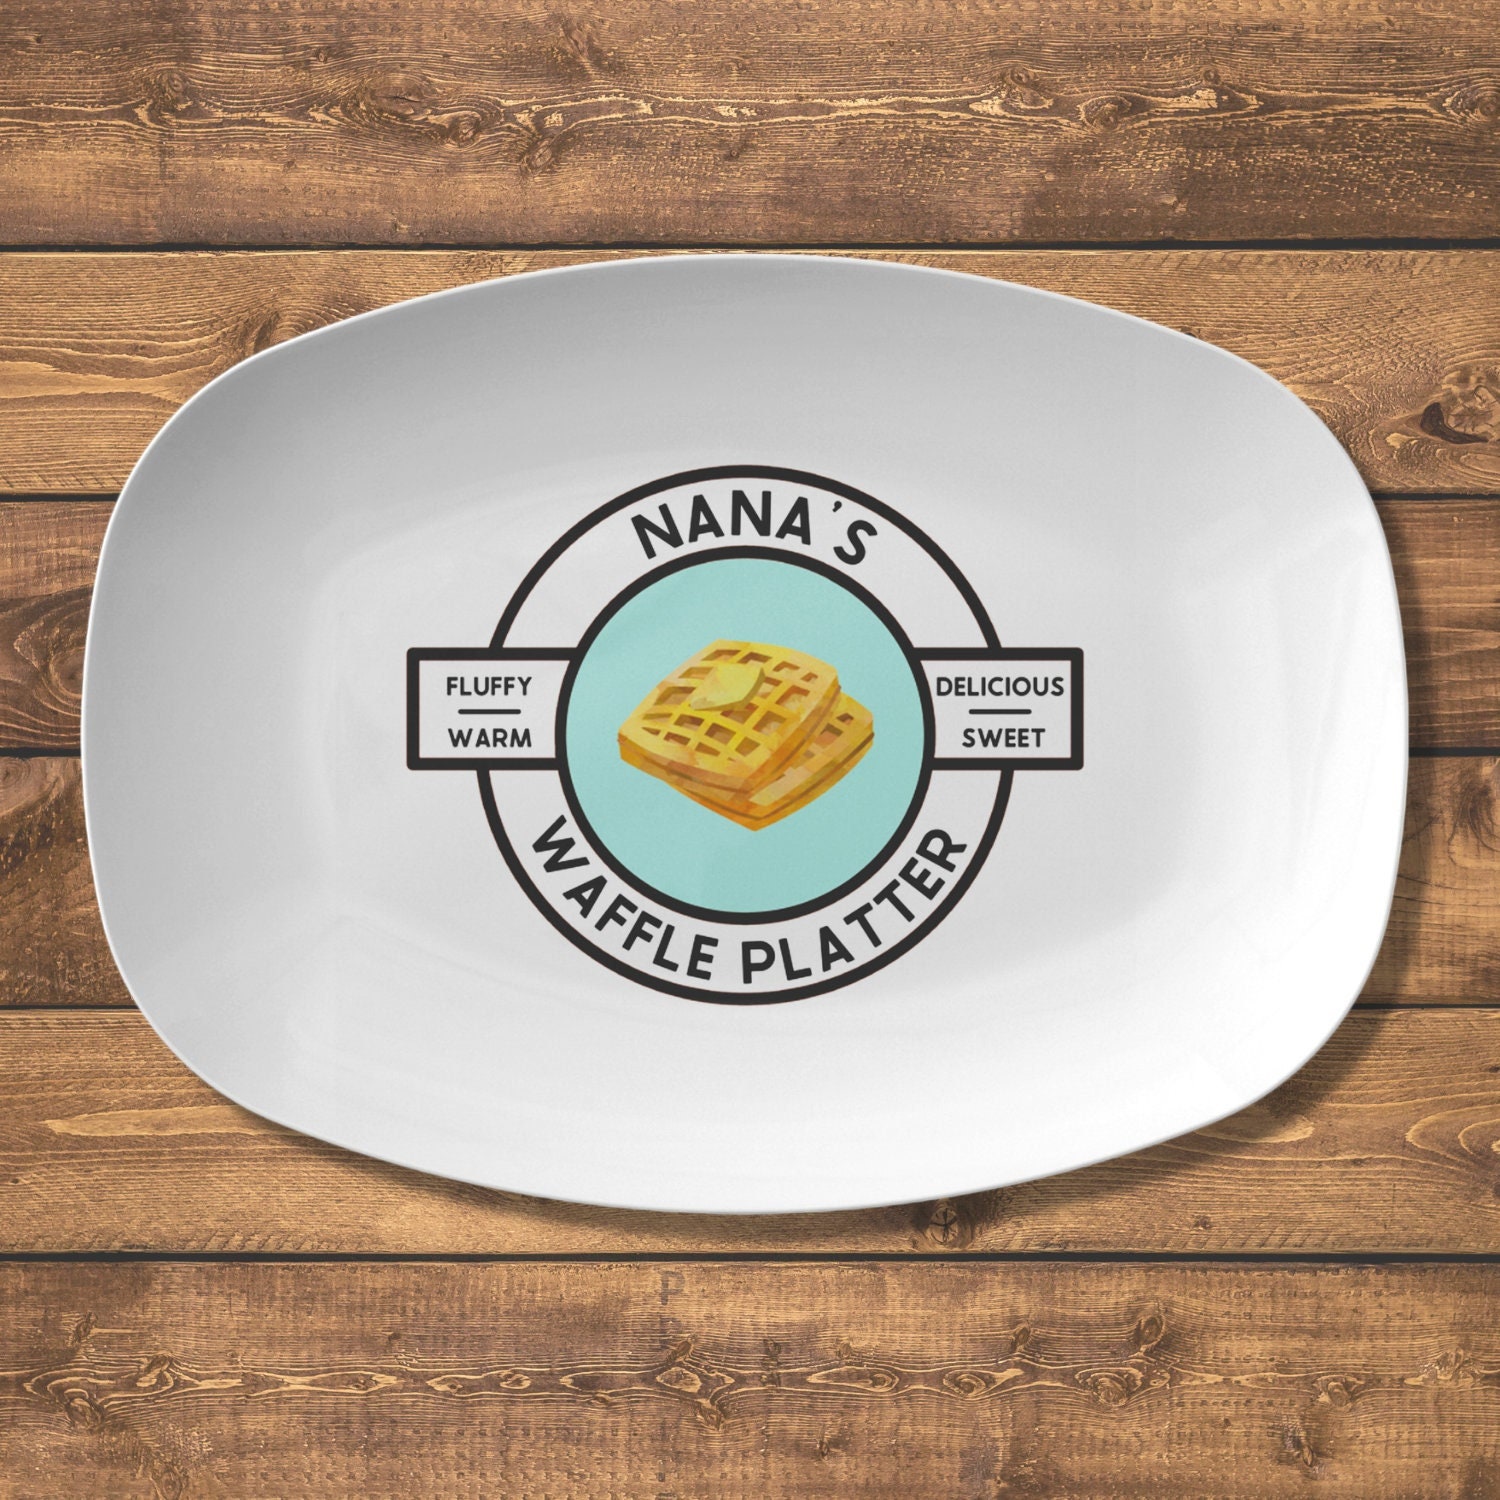 Waffle Breakfast 2 Pk Surprise Set of Miniature 1:6 Scale Plates